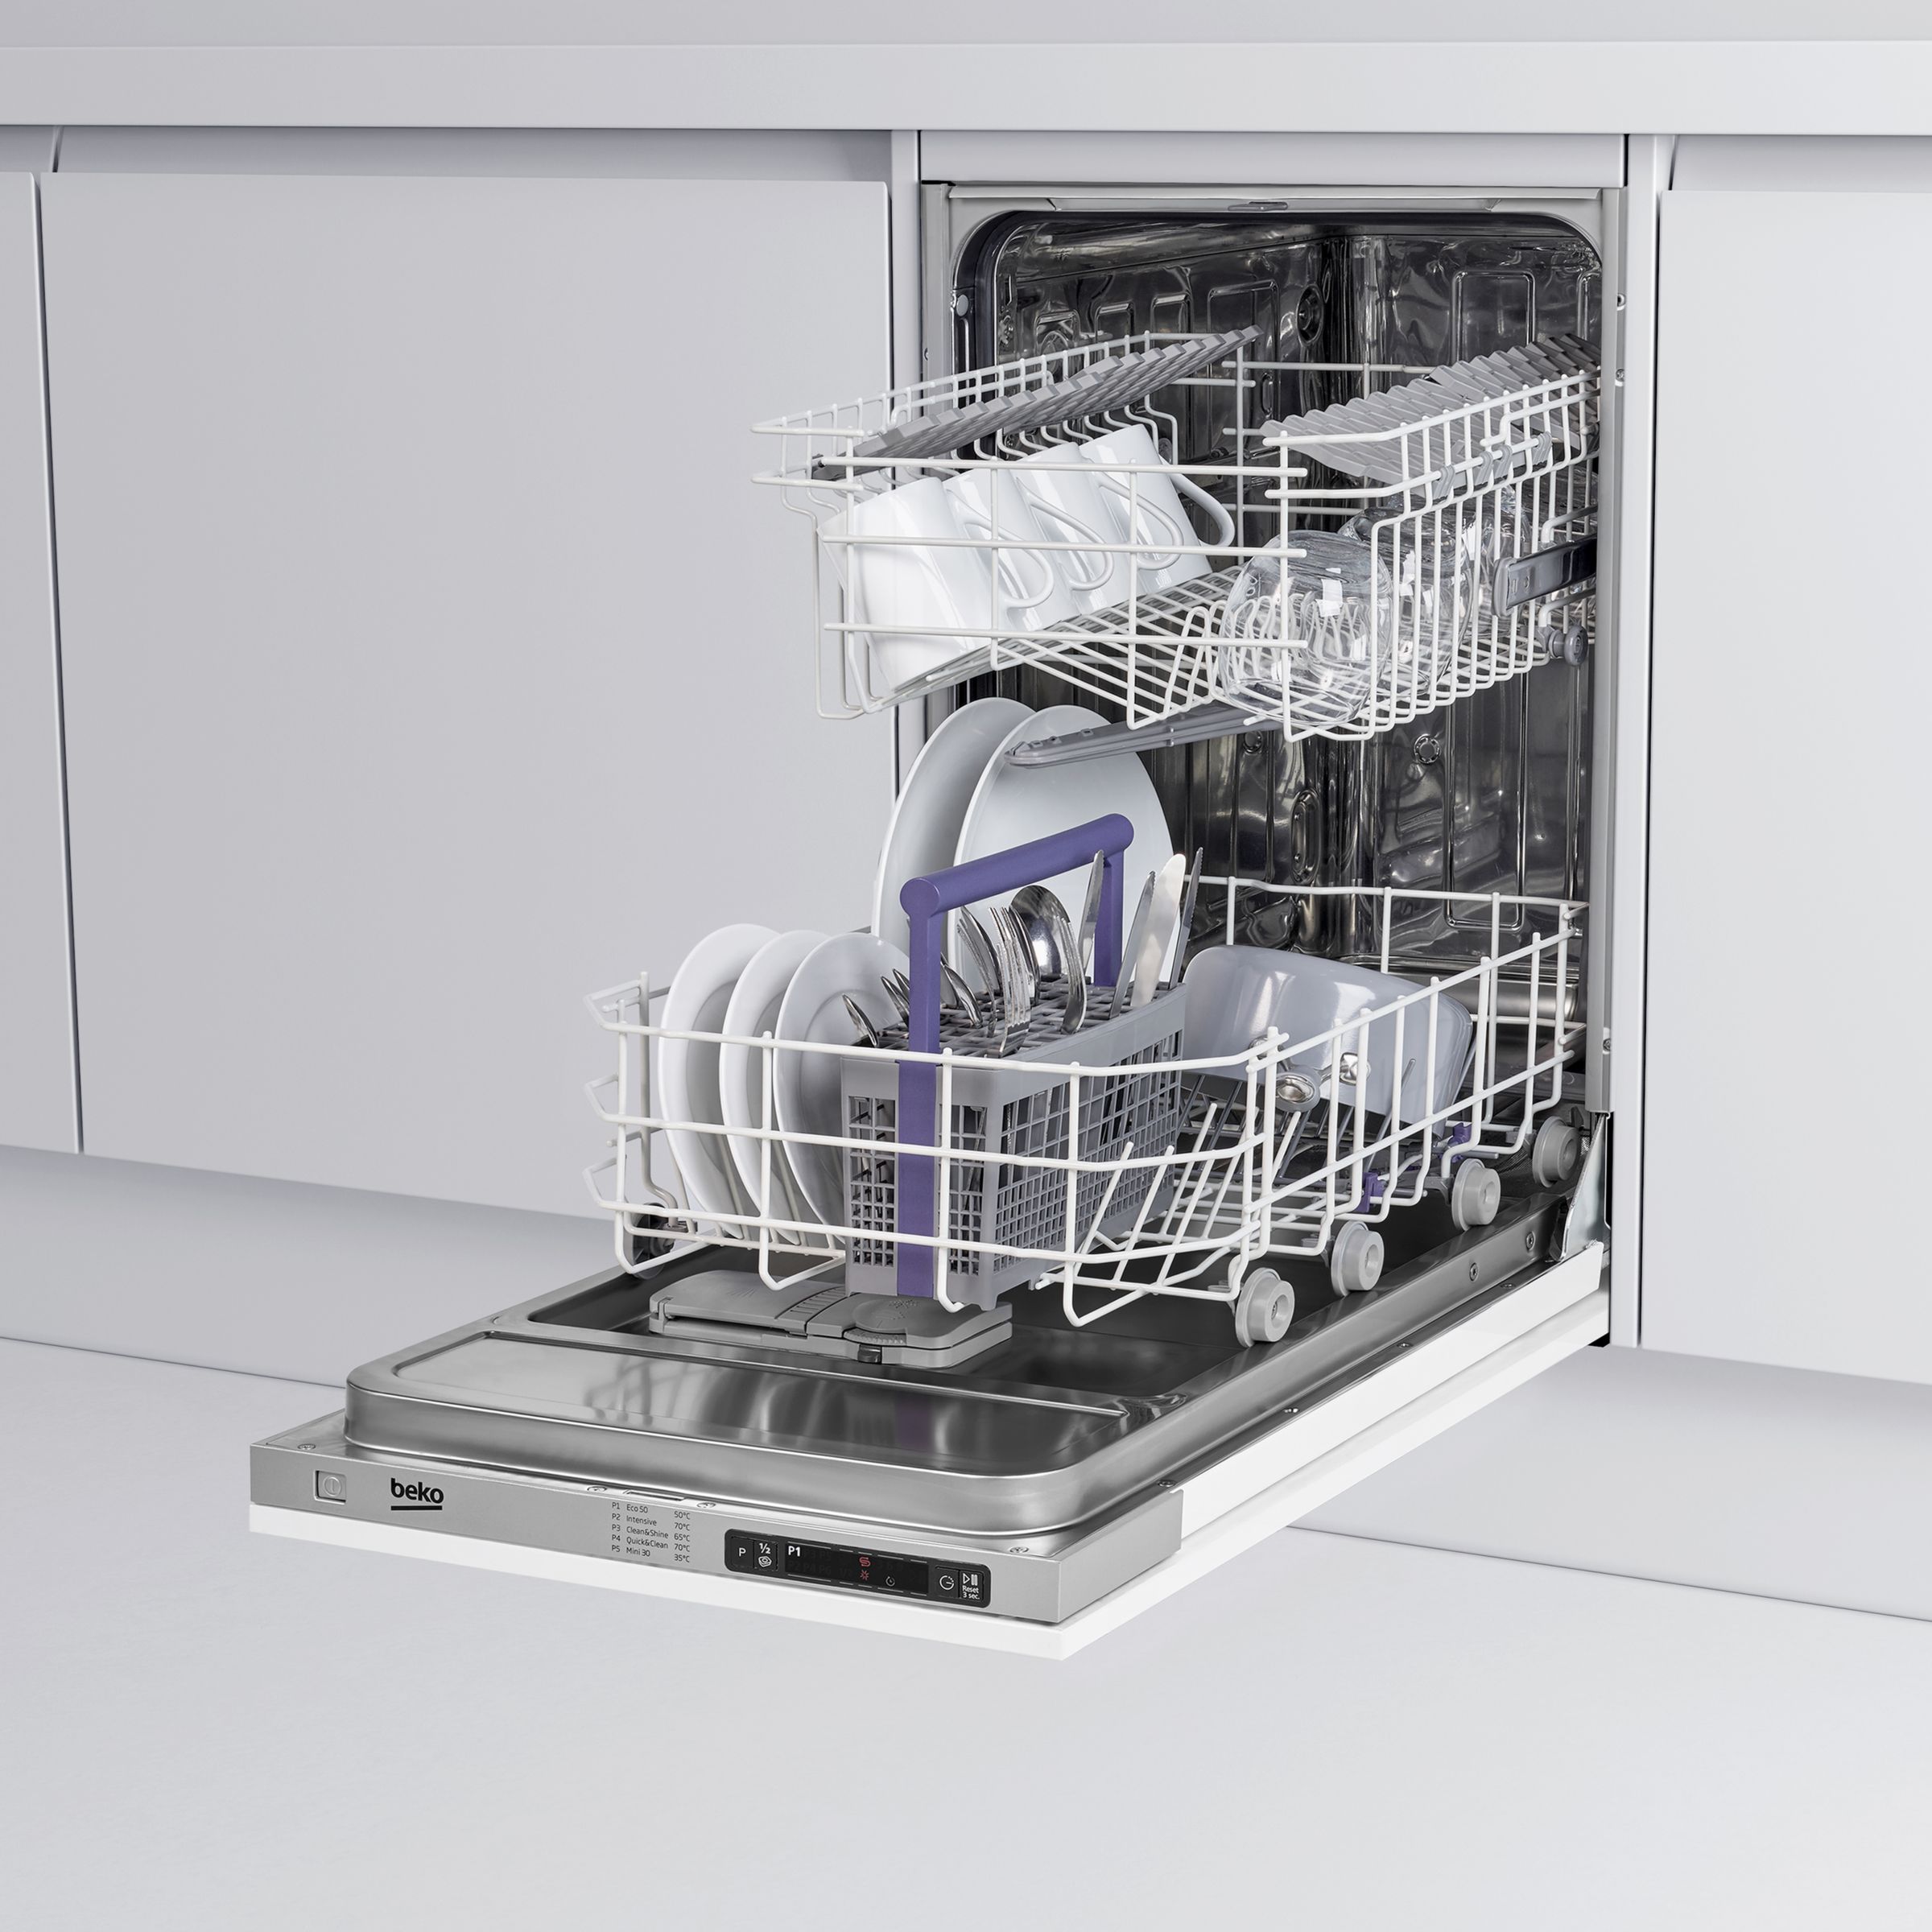 Beko DIS15010 Fully Integrated Slimline Dishwasher at John Lewis & Partners